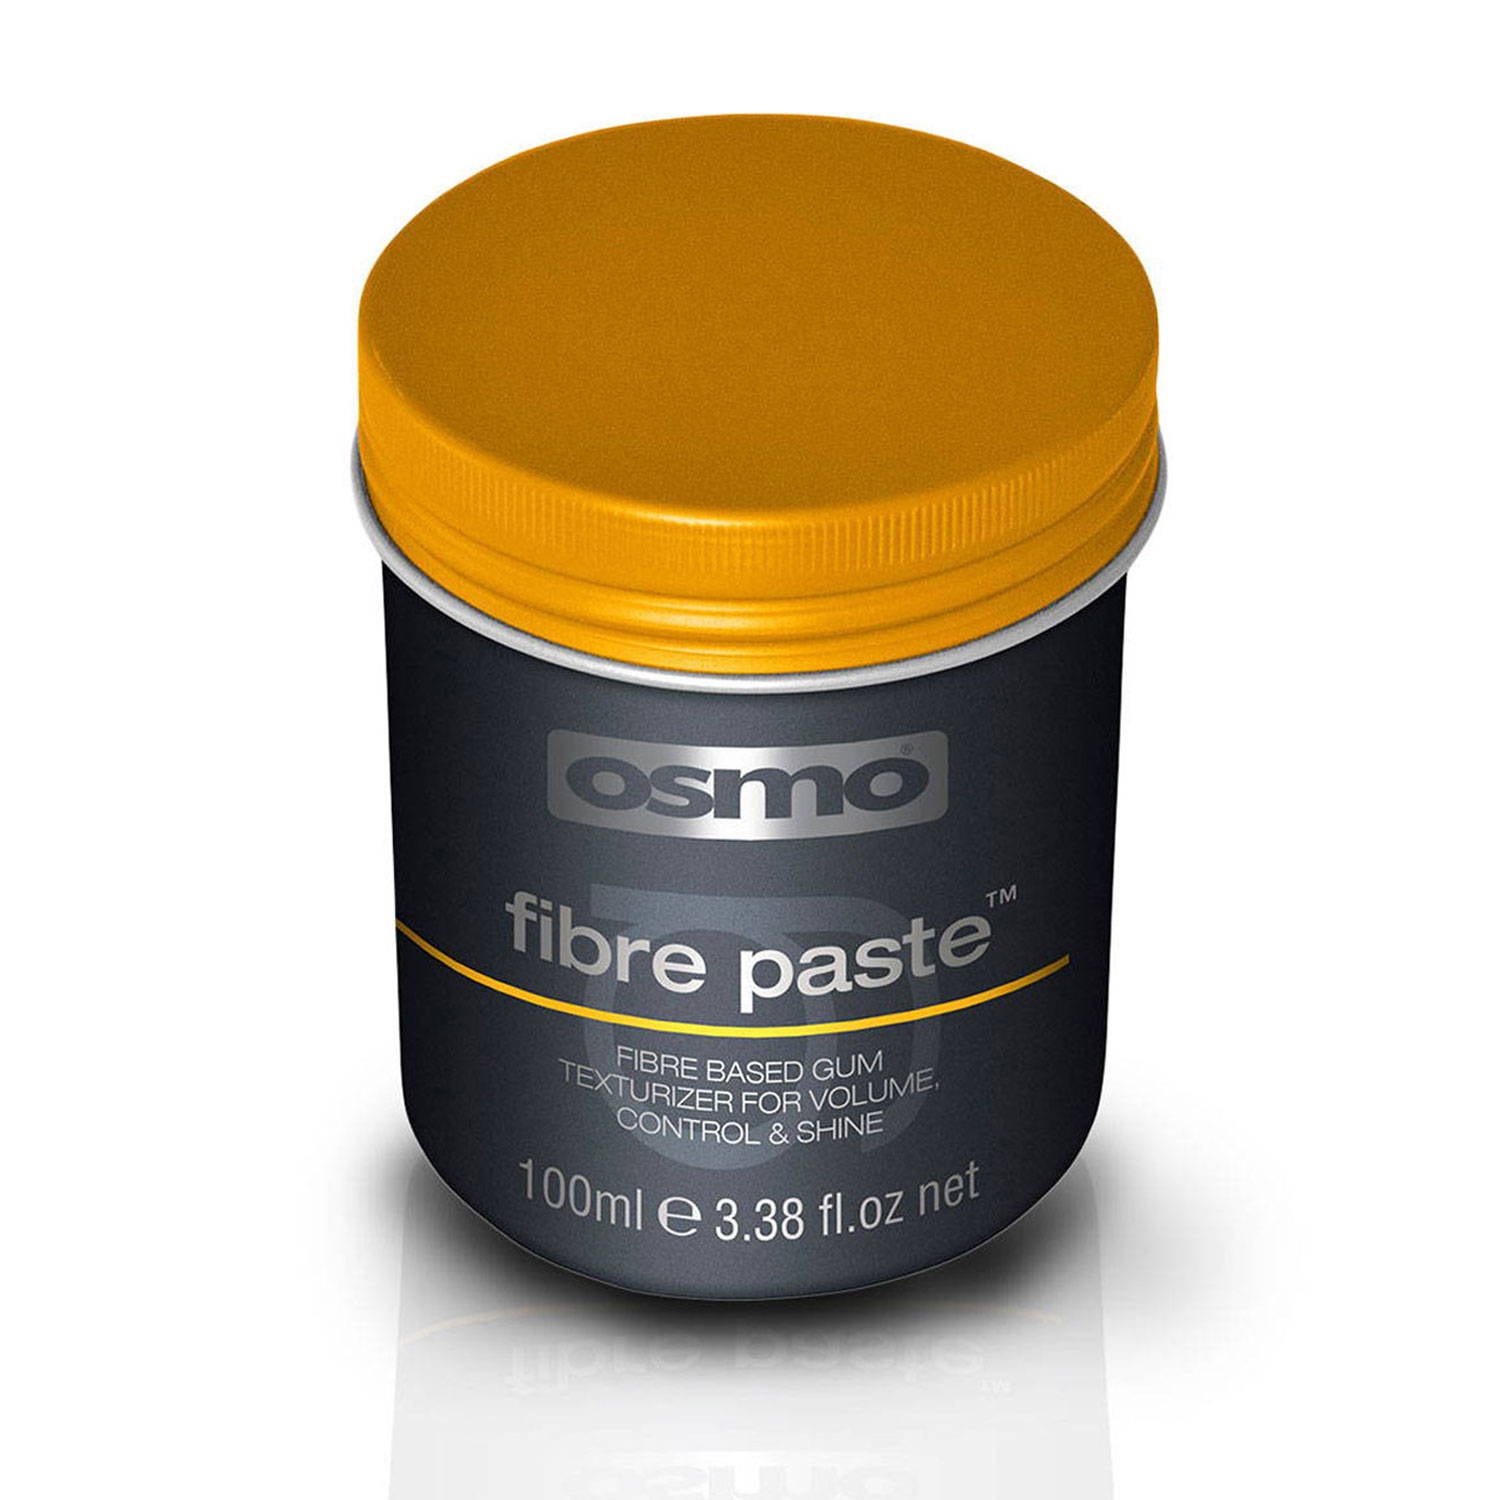 Osmo grooming fibre paste 100ml - 9064008 ARLOS MEN'S CARE LINE